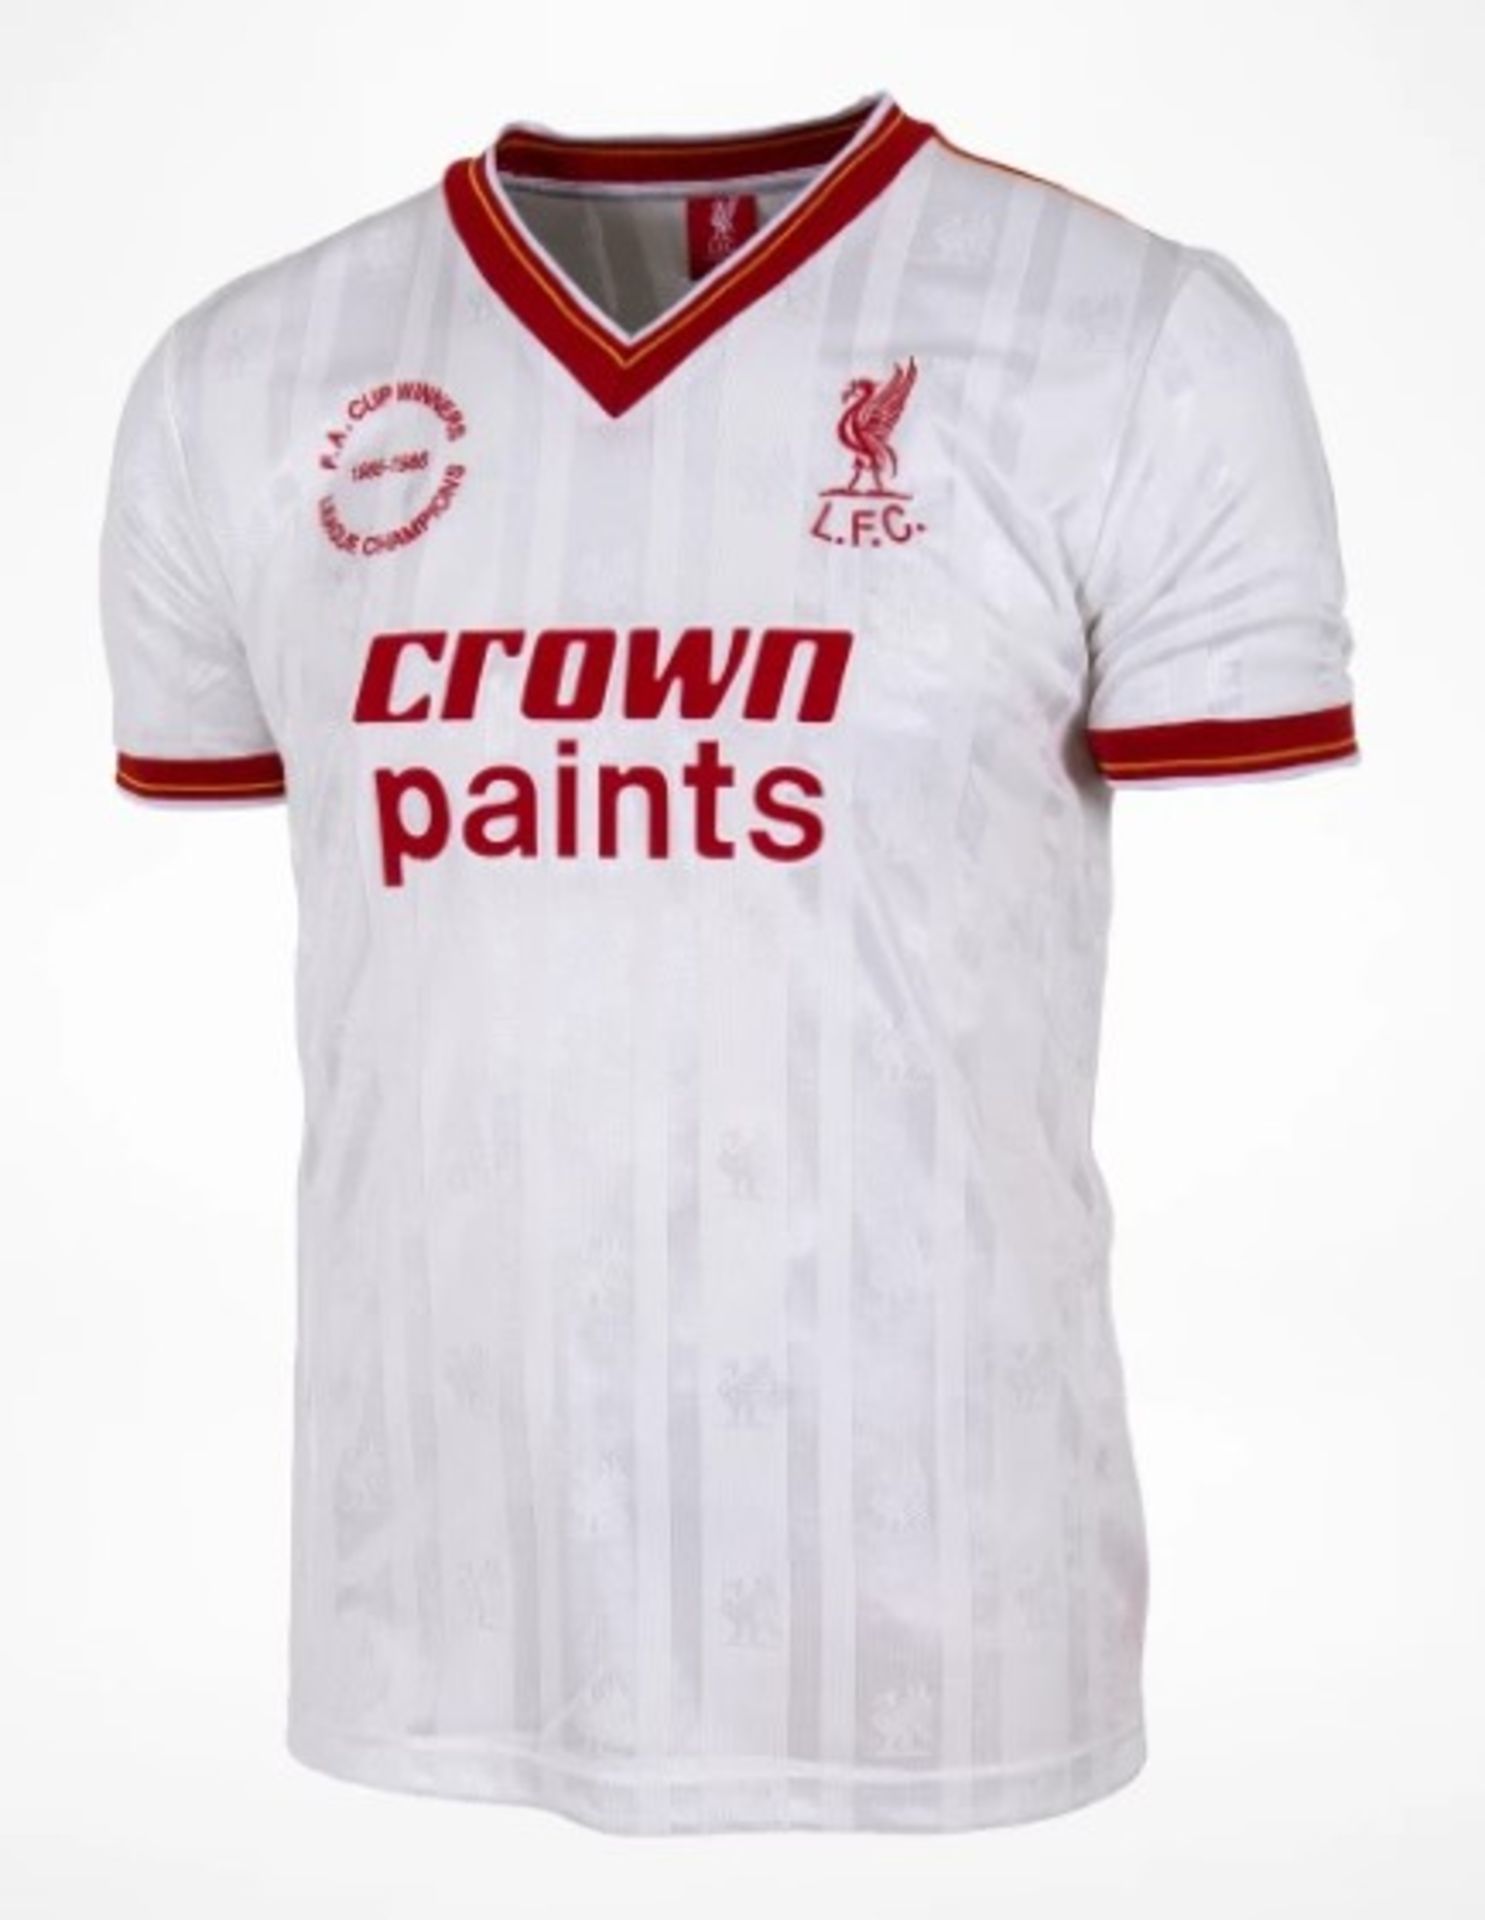 Liverpool Adults Retro 1986 Home Shirt - XL